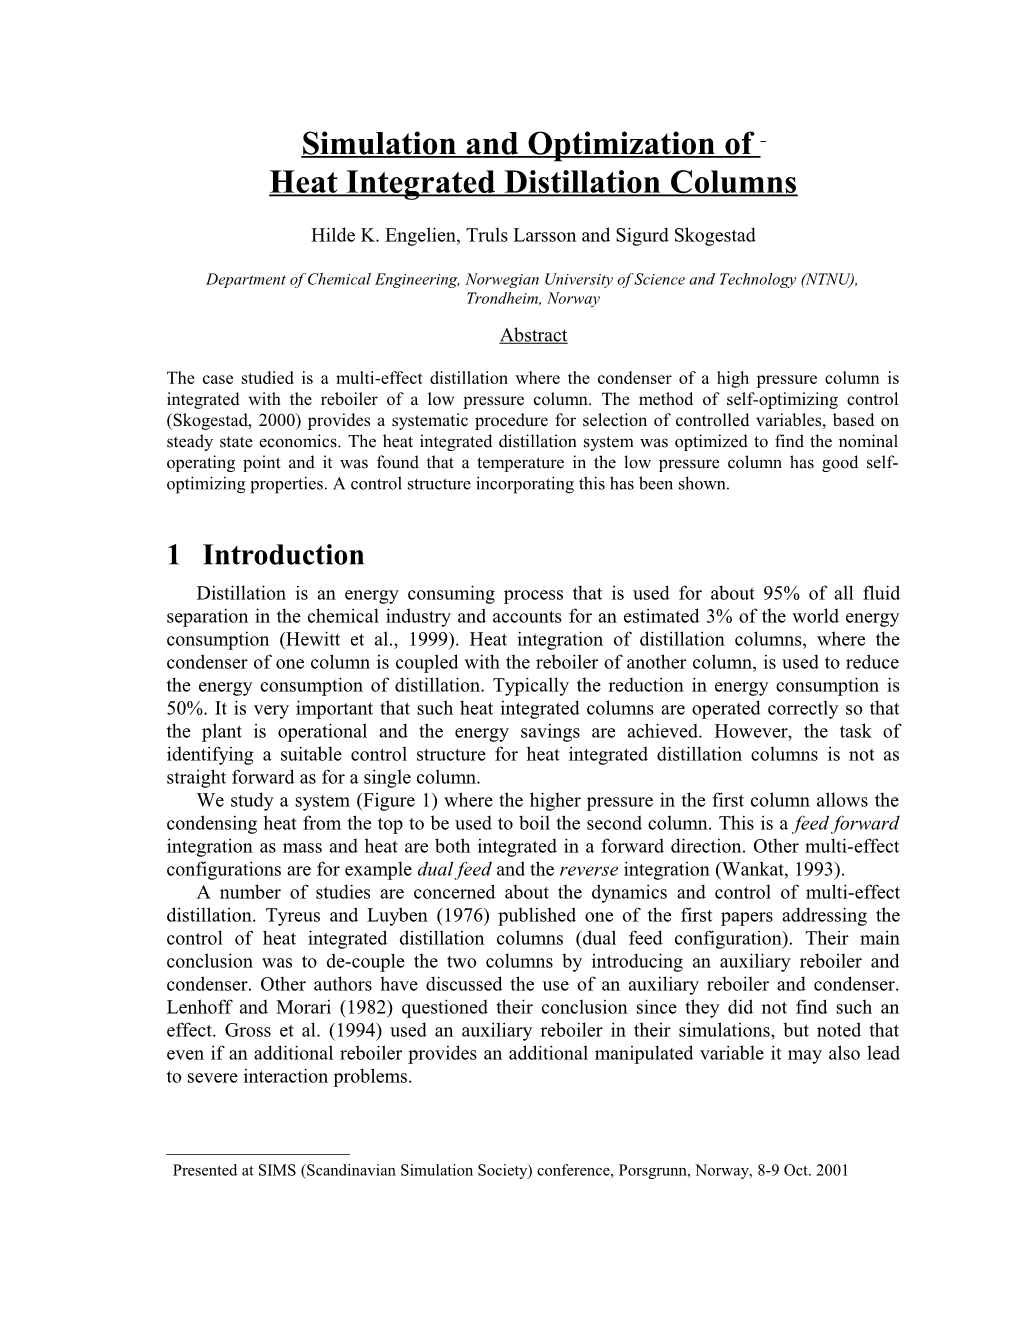 Simulation and Optimization of Multi-Effect Distillation Columns